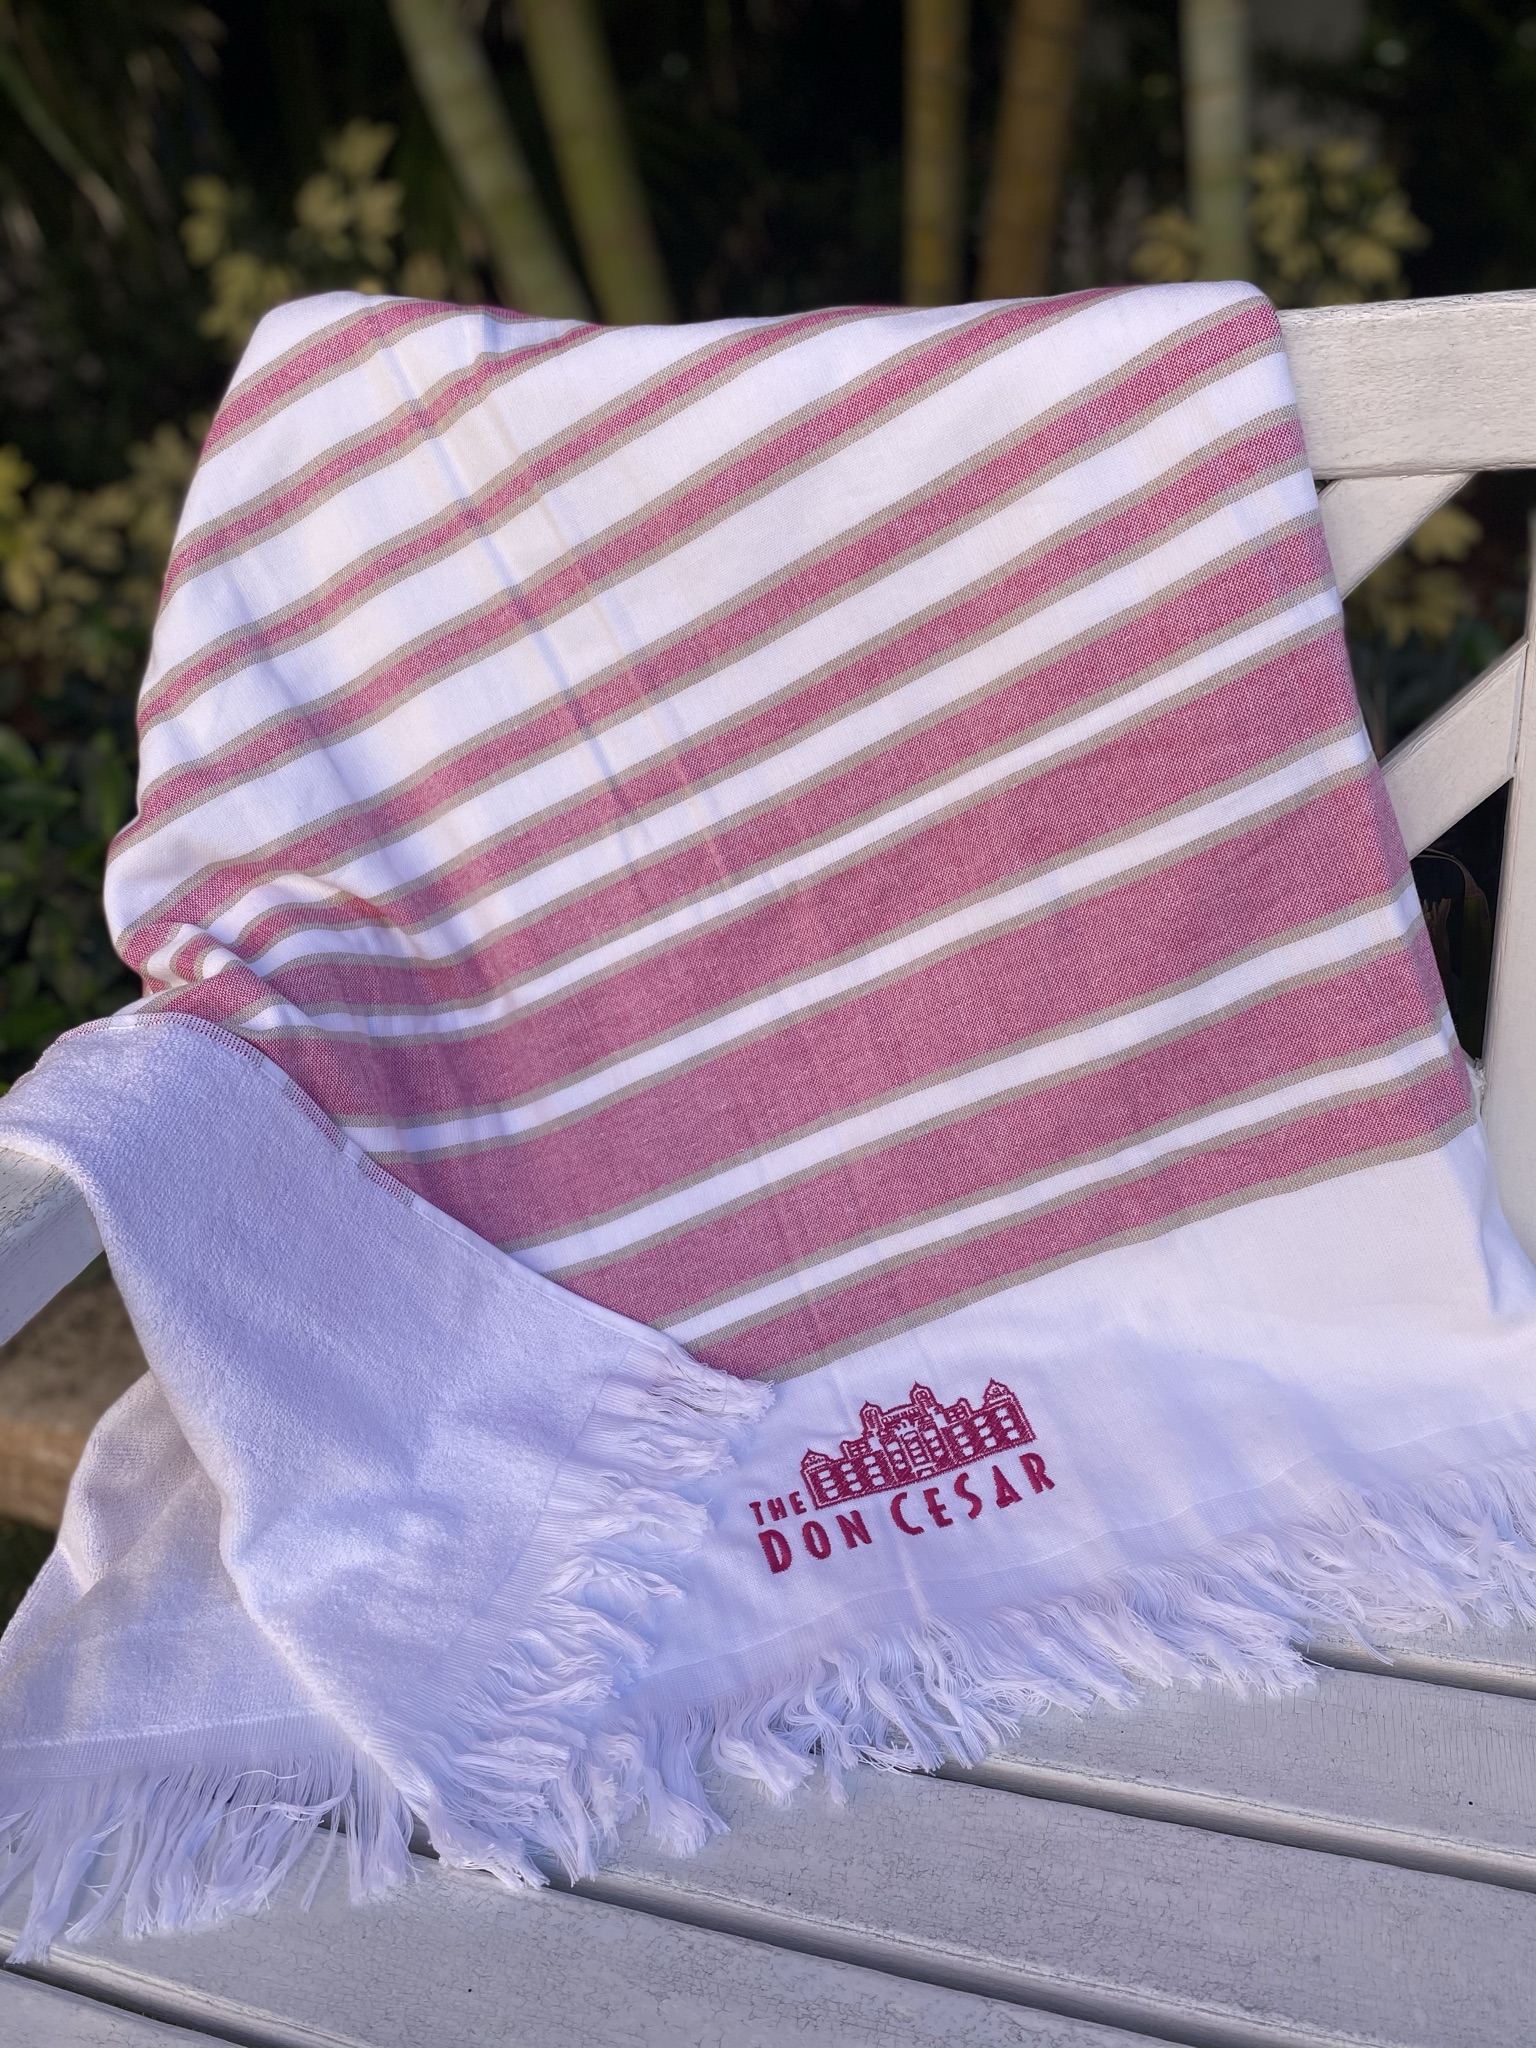 SANTORINI CHIC COLLECTION Round Cotton Beach Towel Pink Mandolin w/Fringe-NWT 